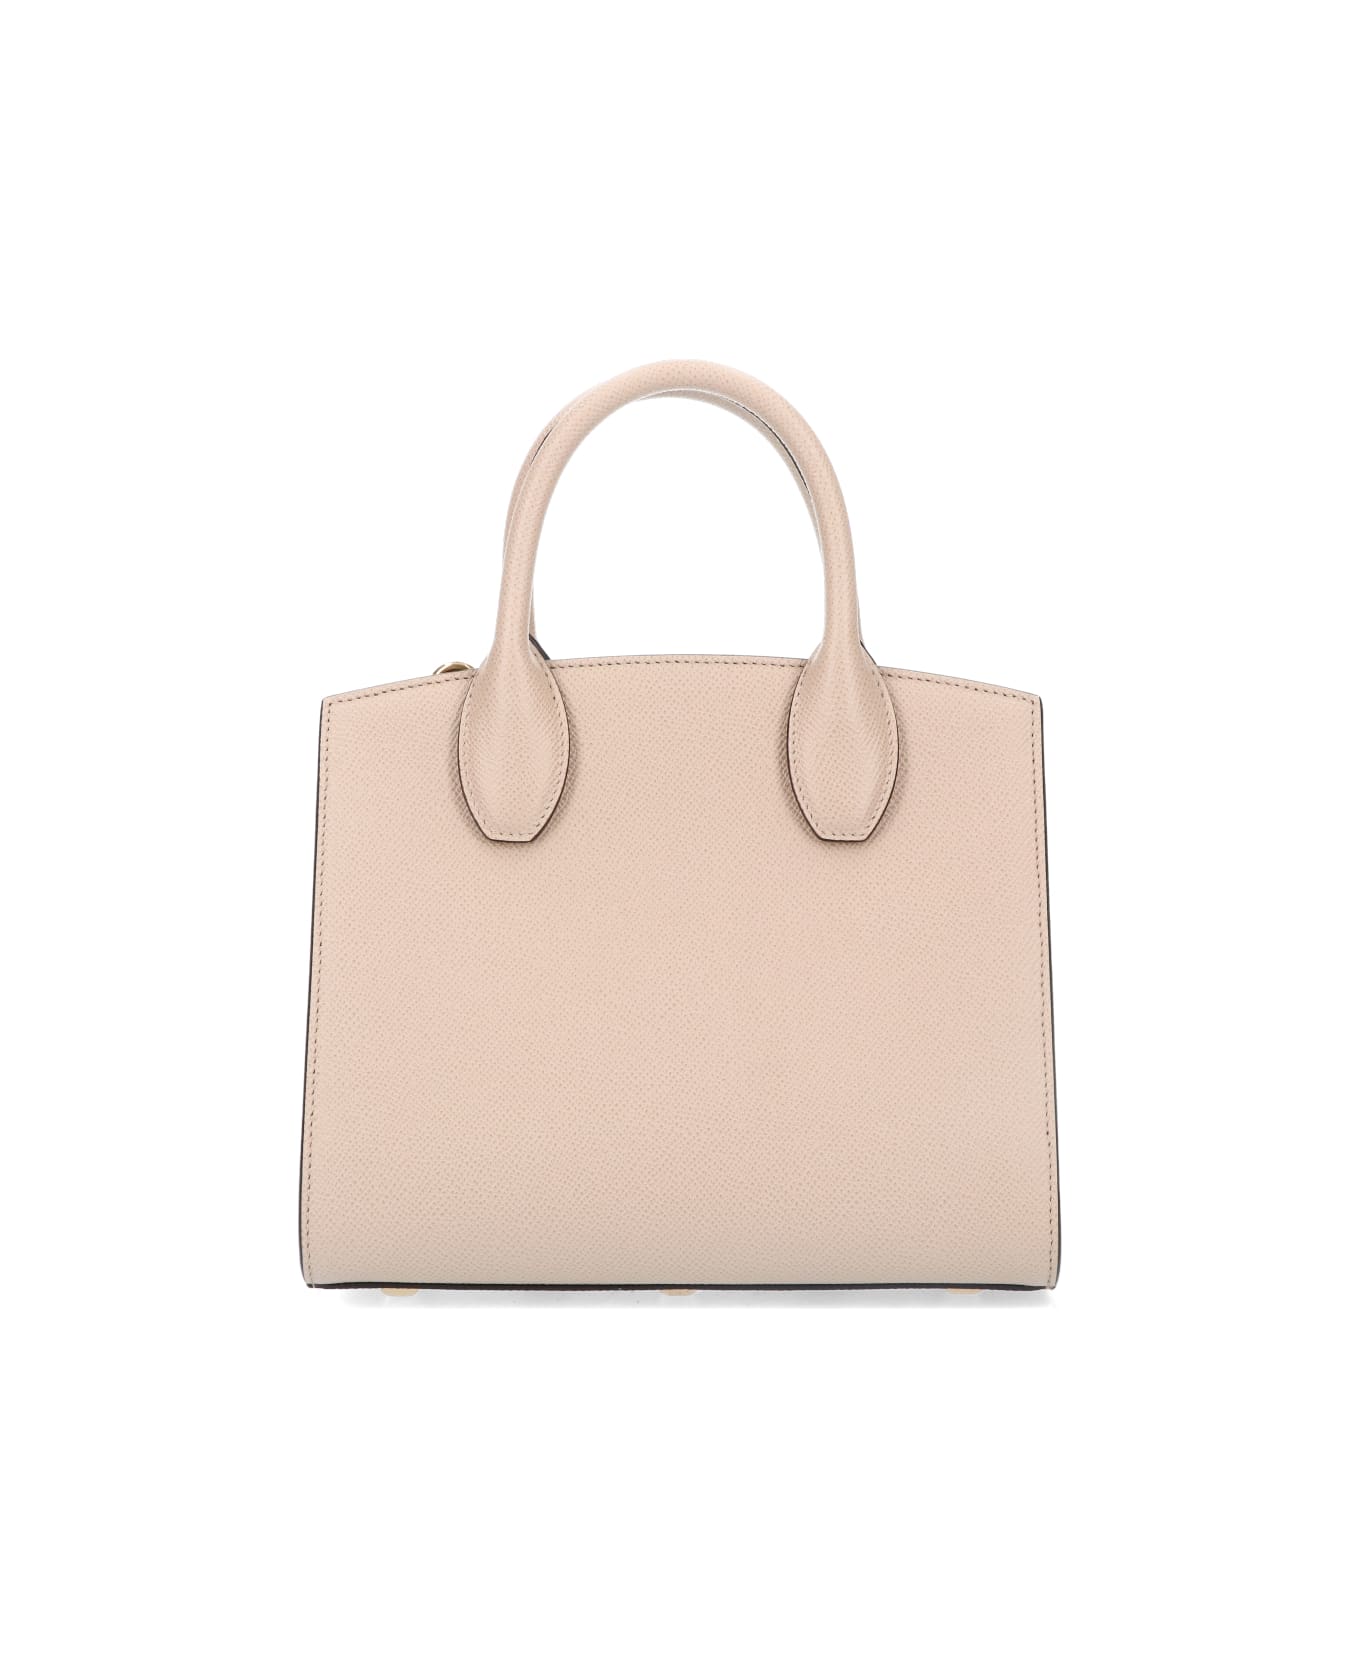 Ferragamo Studio Box Leather Handbag - Beige